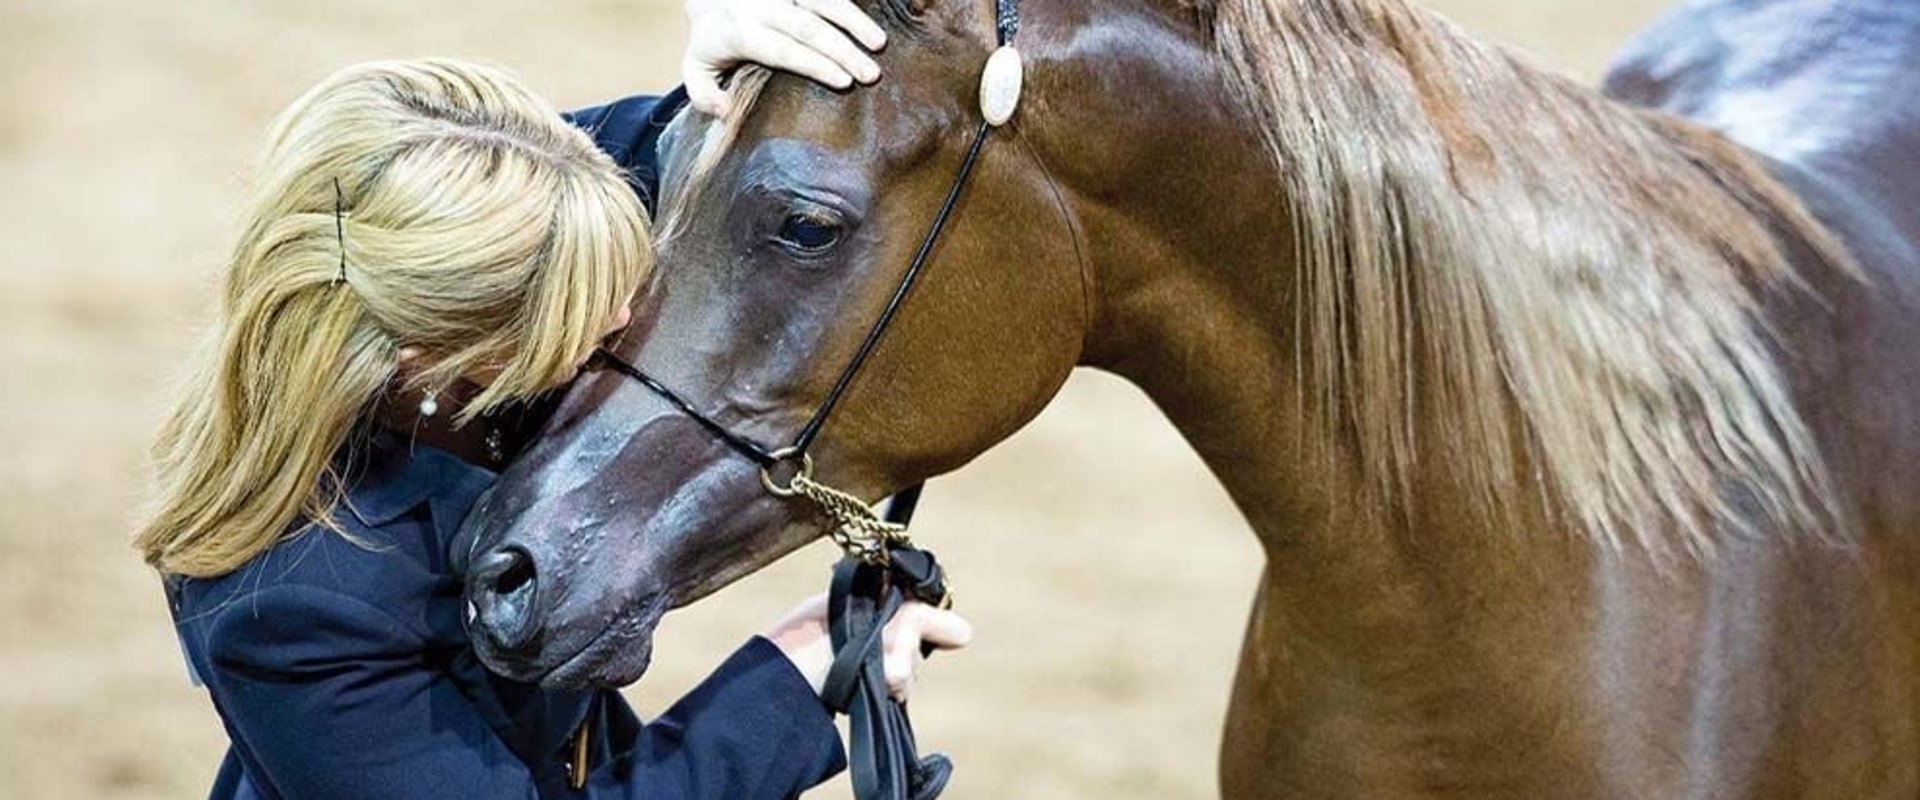 Volunteer at the World's Best Arab Equestrian Shows in Scottsdale, Arizona